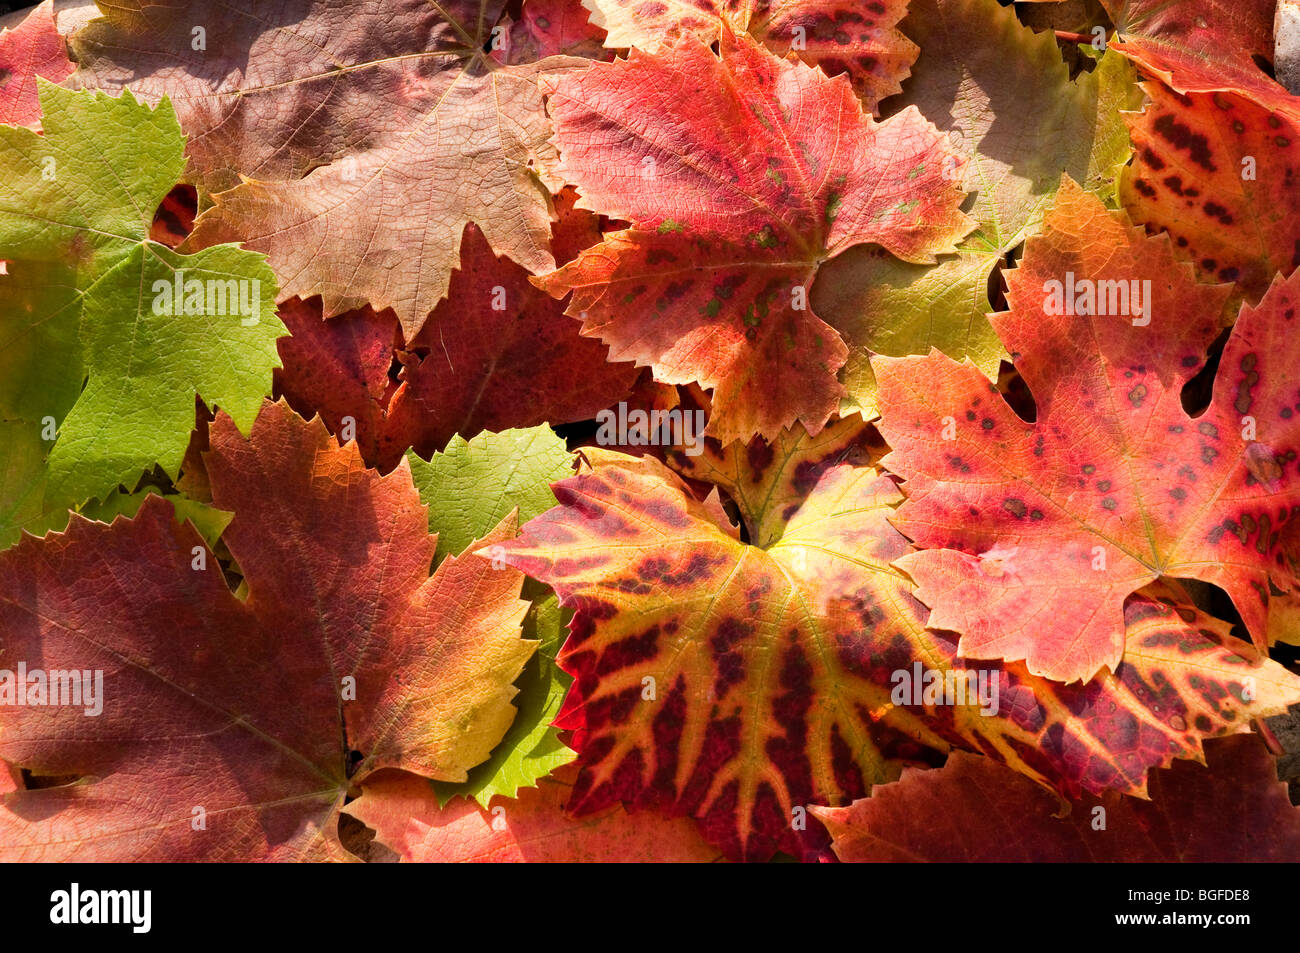 Autumn colour shown in vine leaves Stock Photo